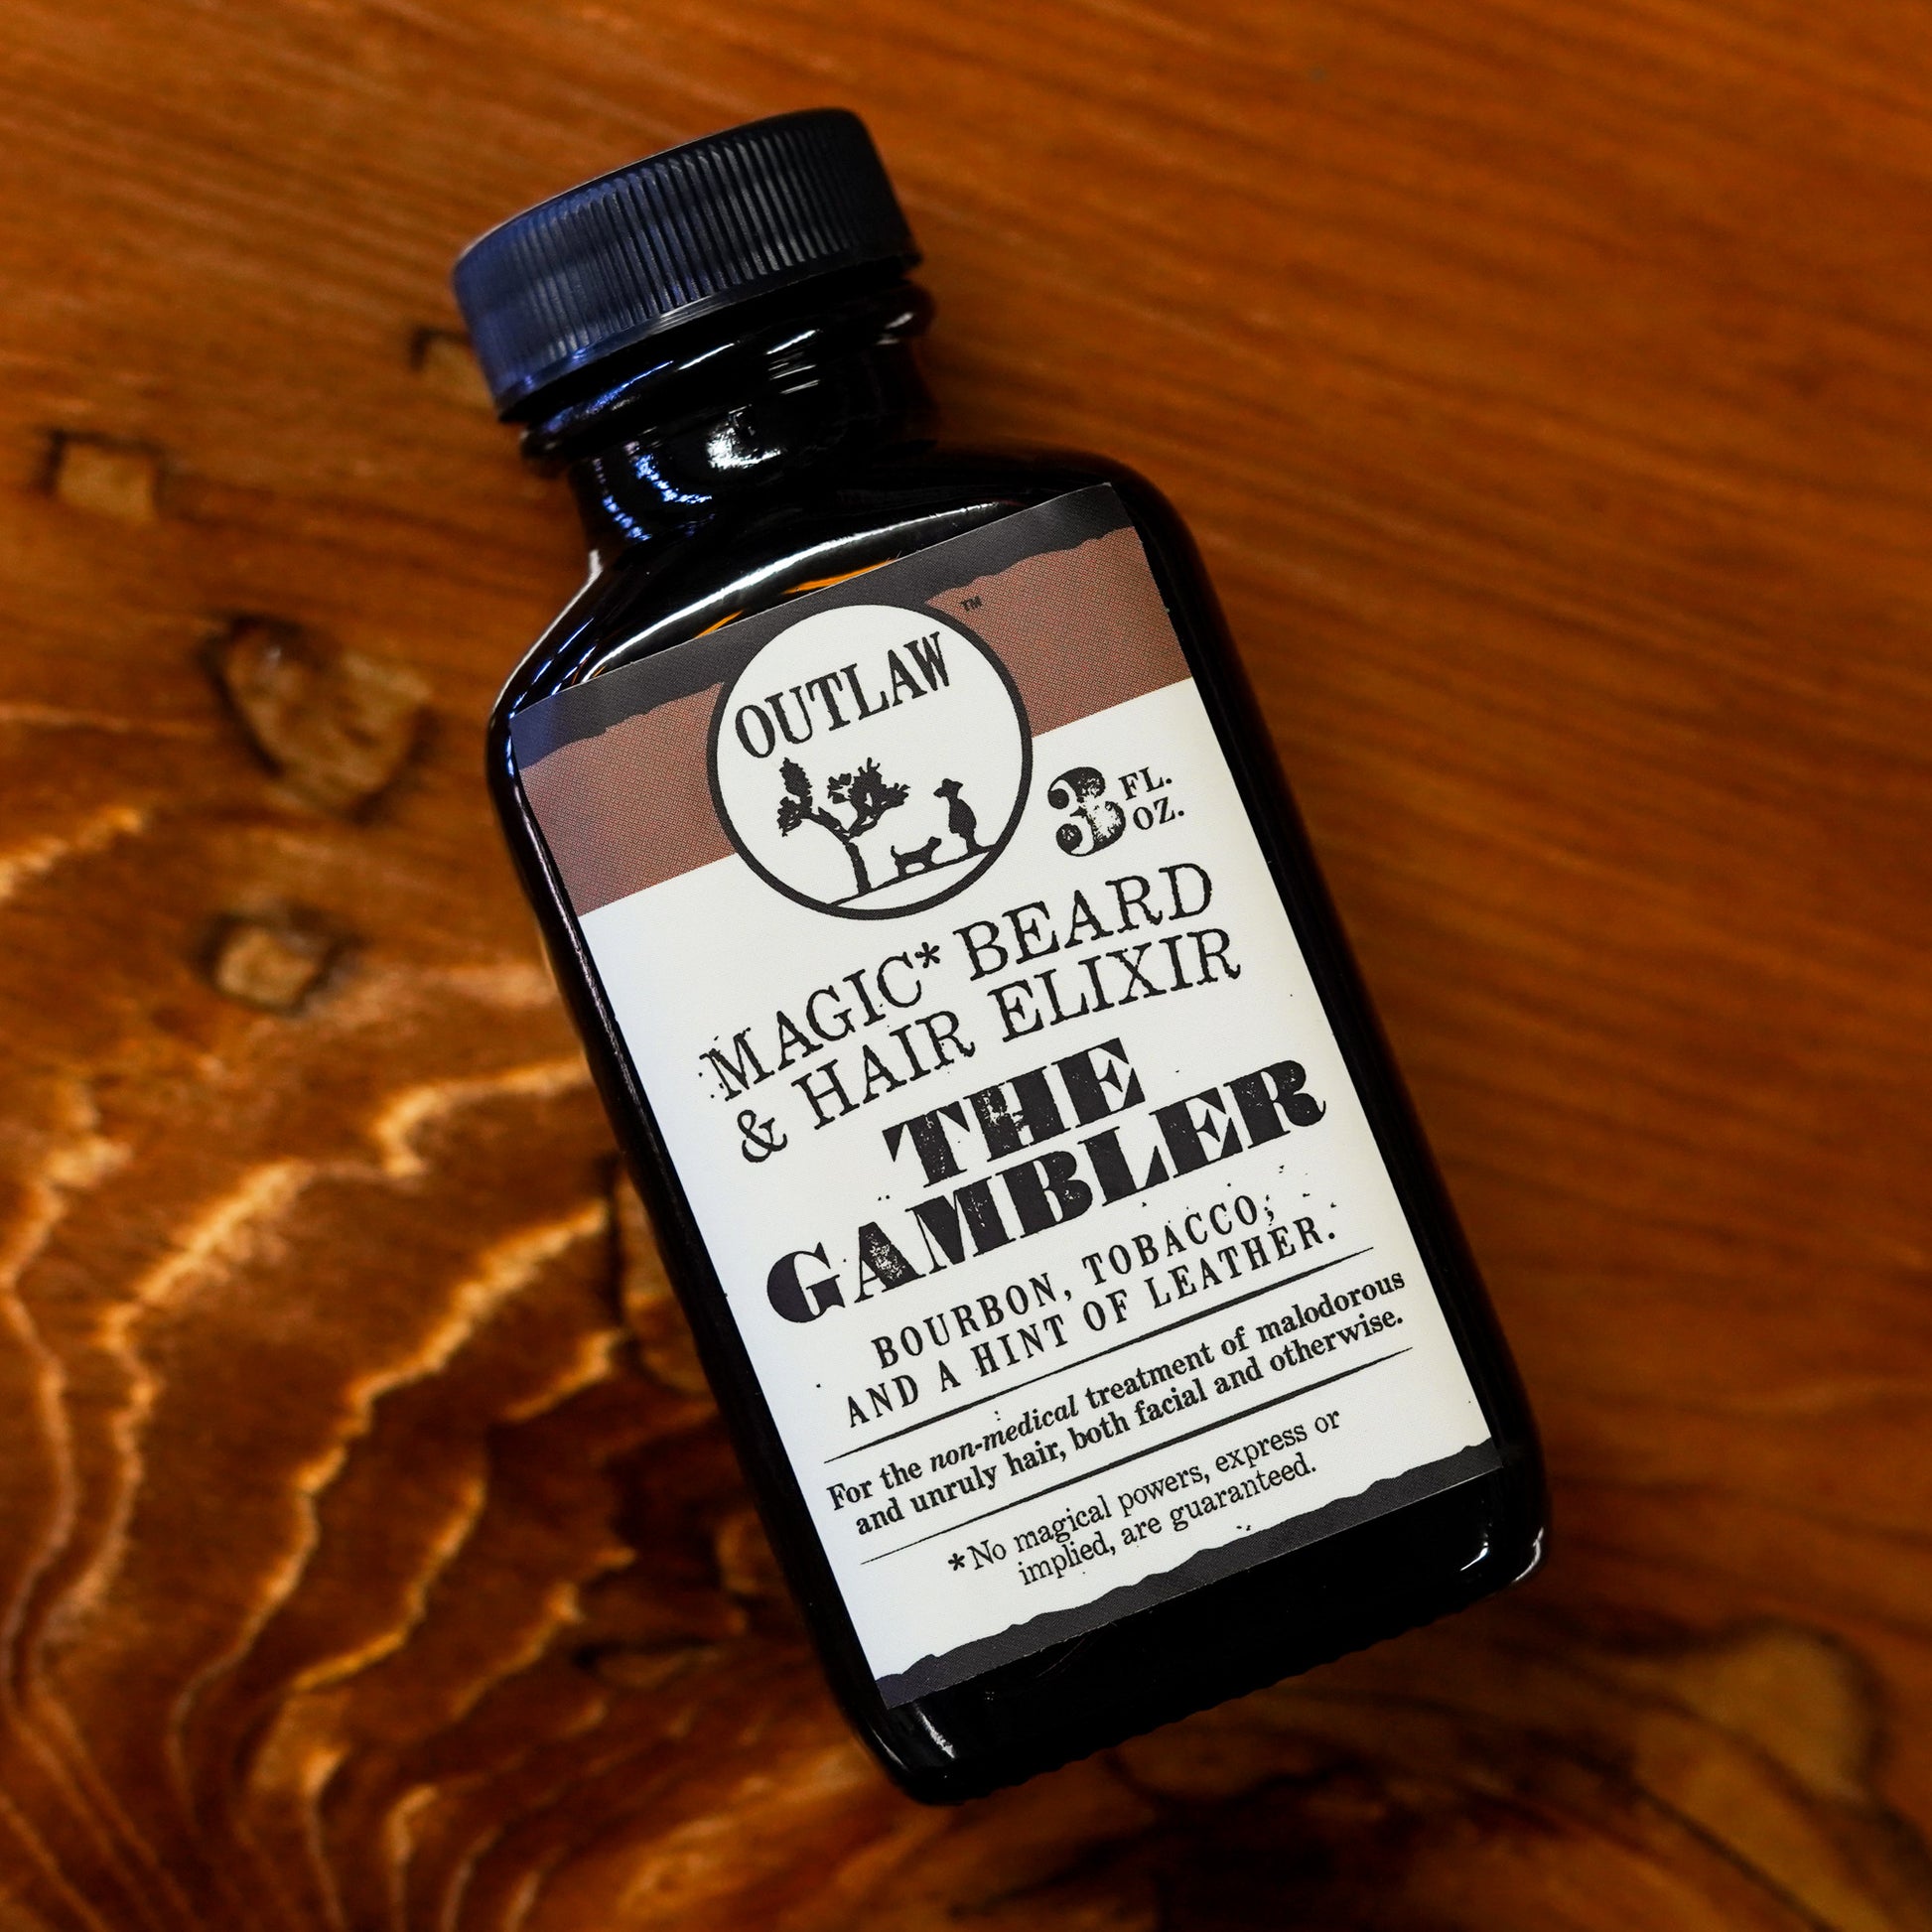 Dr. Squatch Beard Oil Sandalwood Bourbon – Beard Conditioning Oil